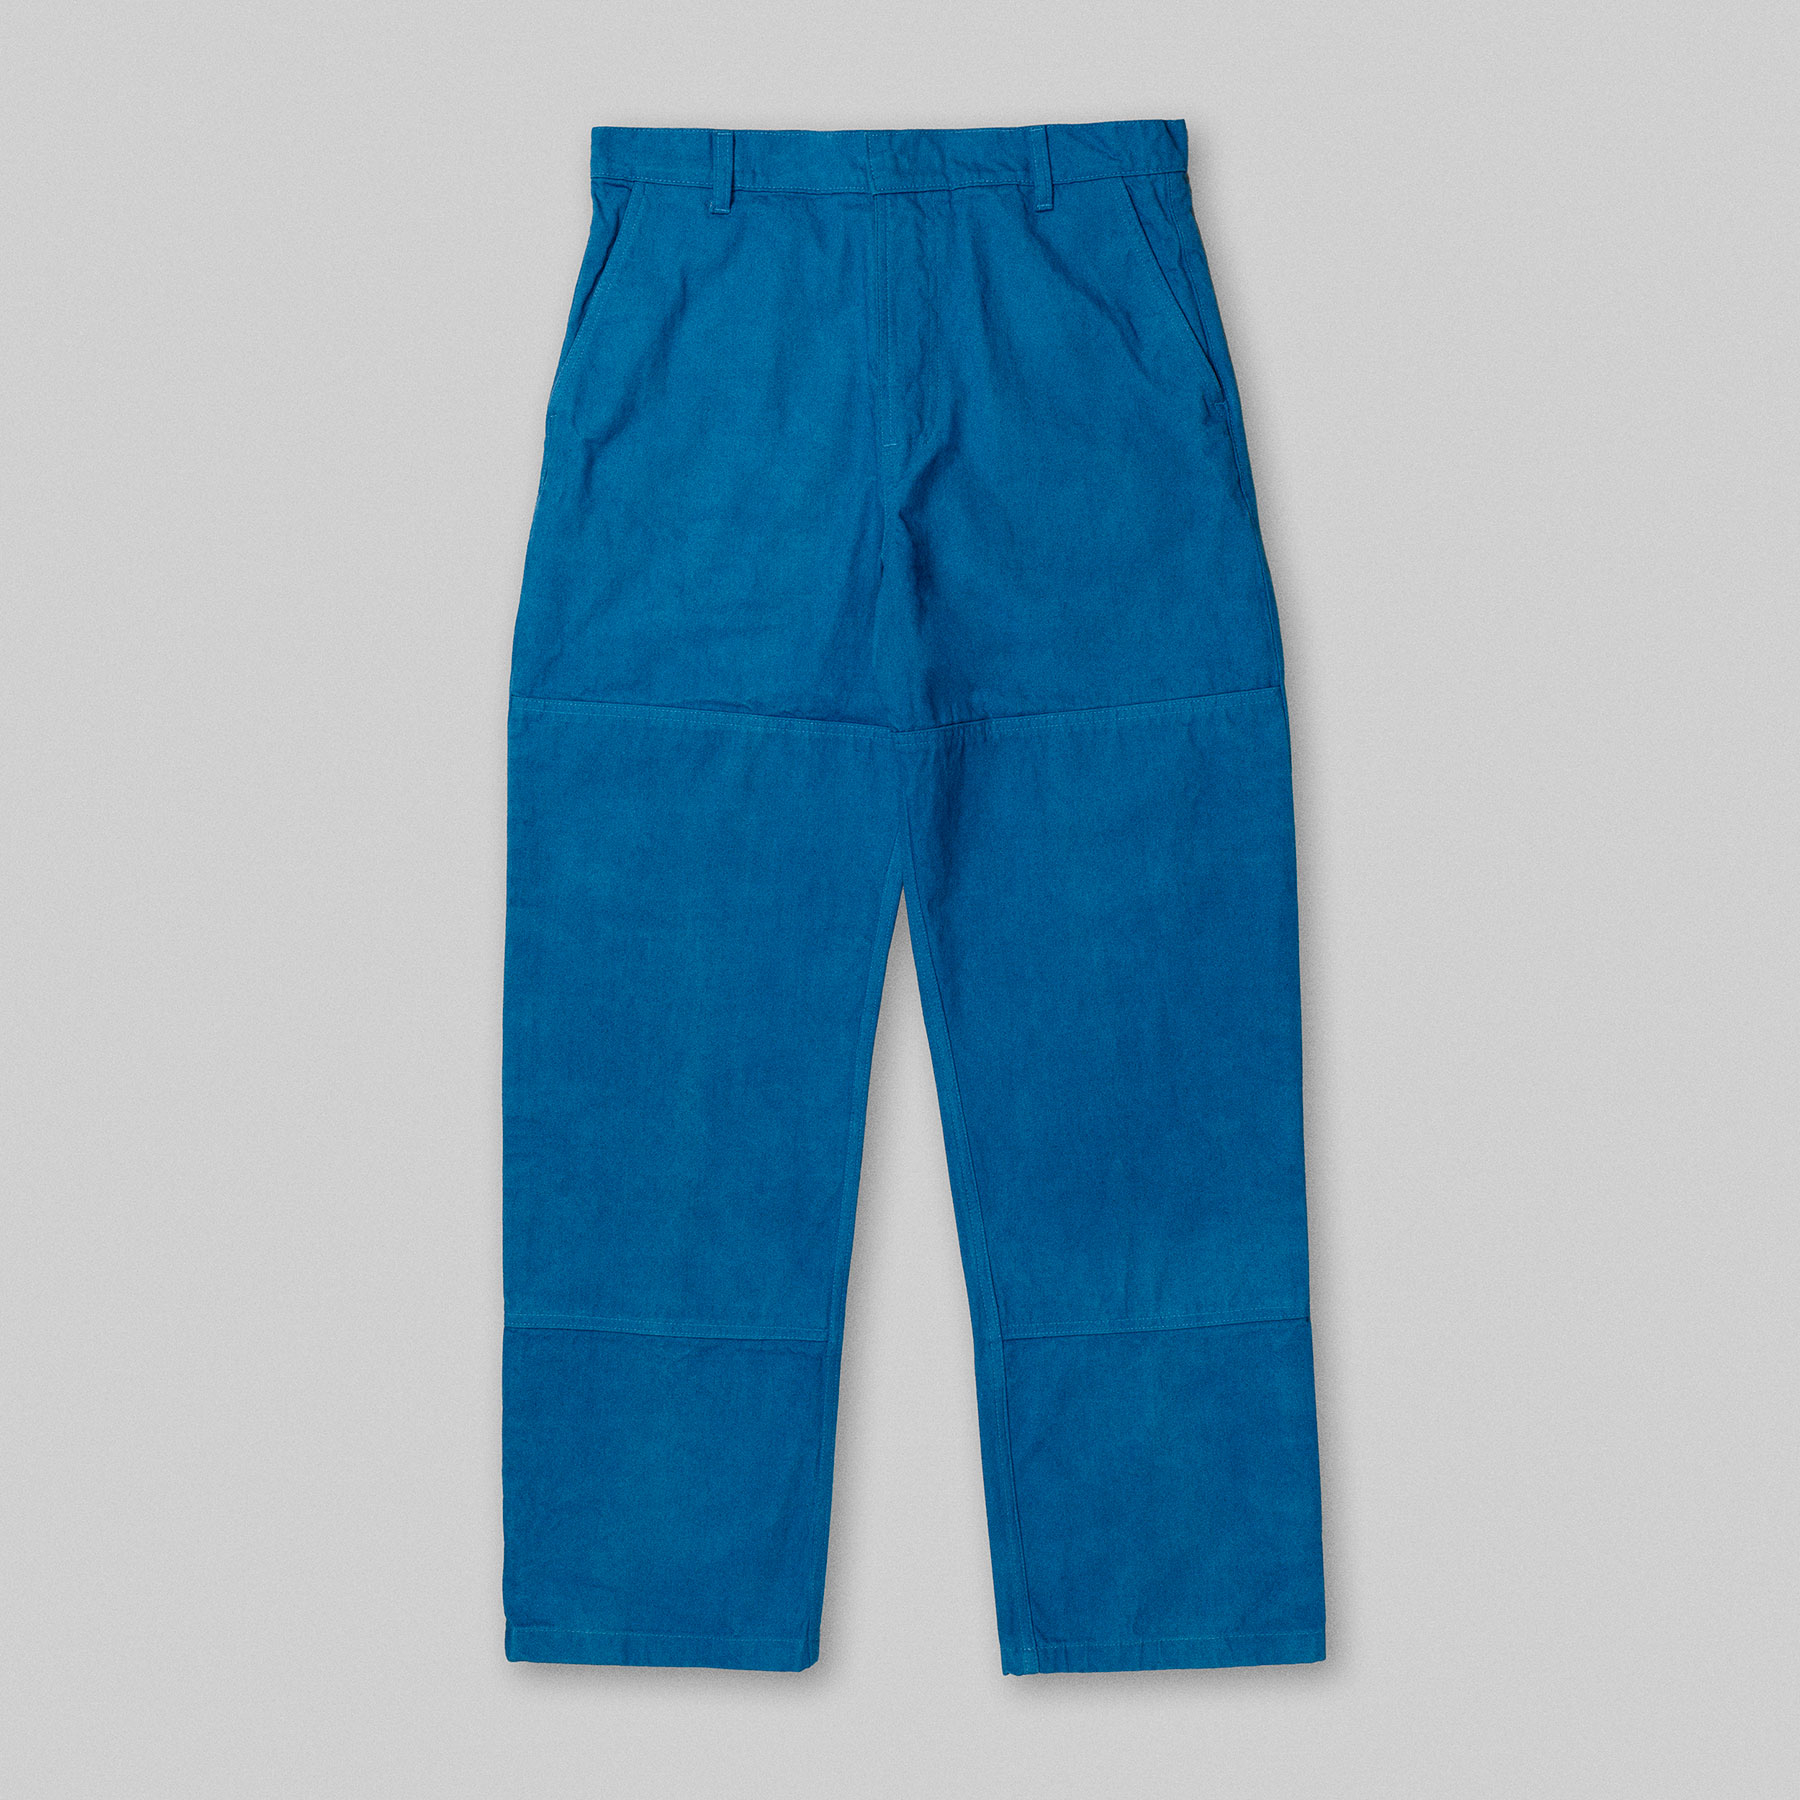 4 POCKET Pants by Arpenteur in Medium woad color